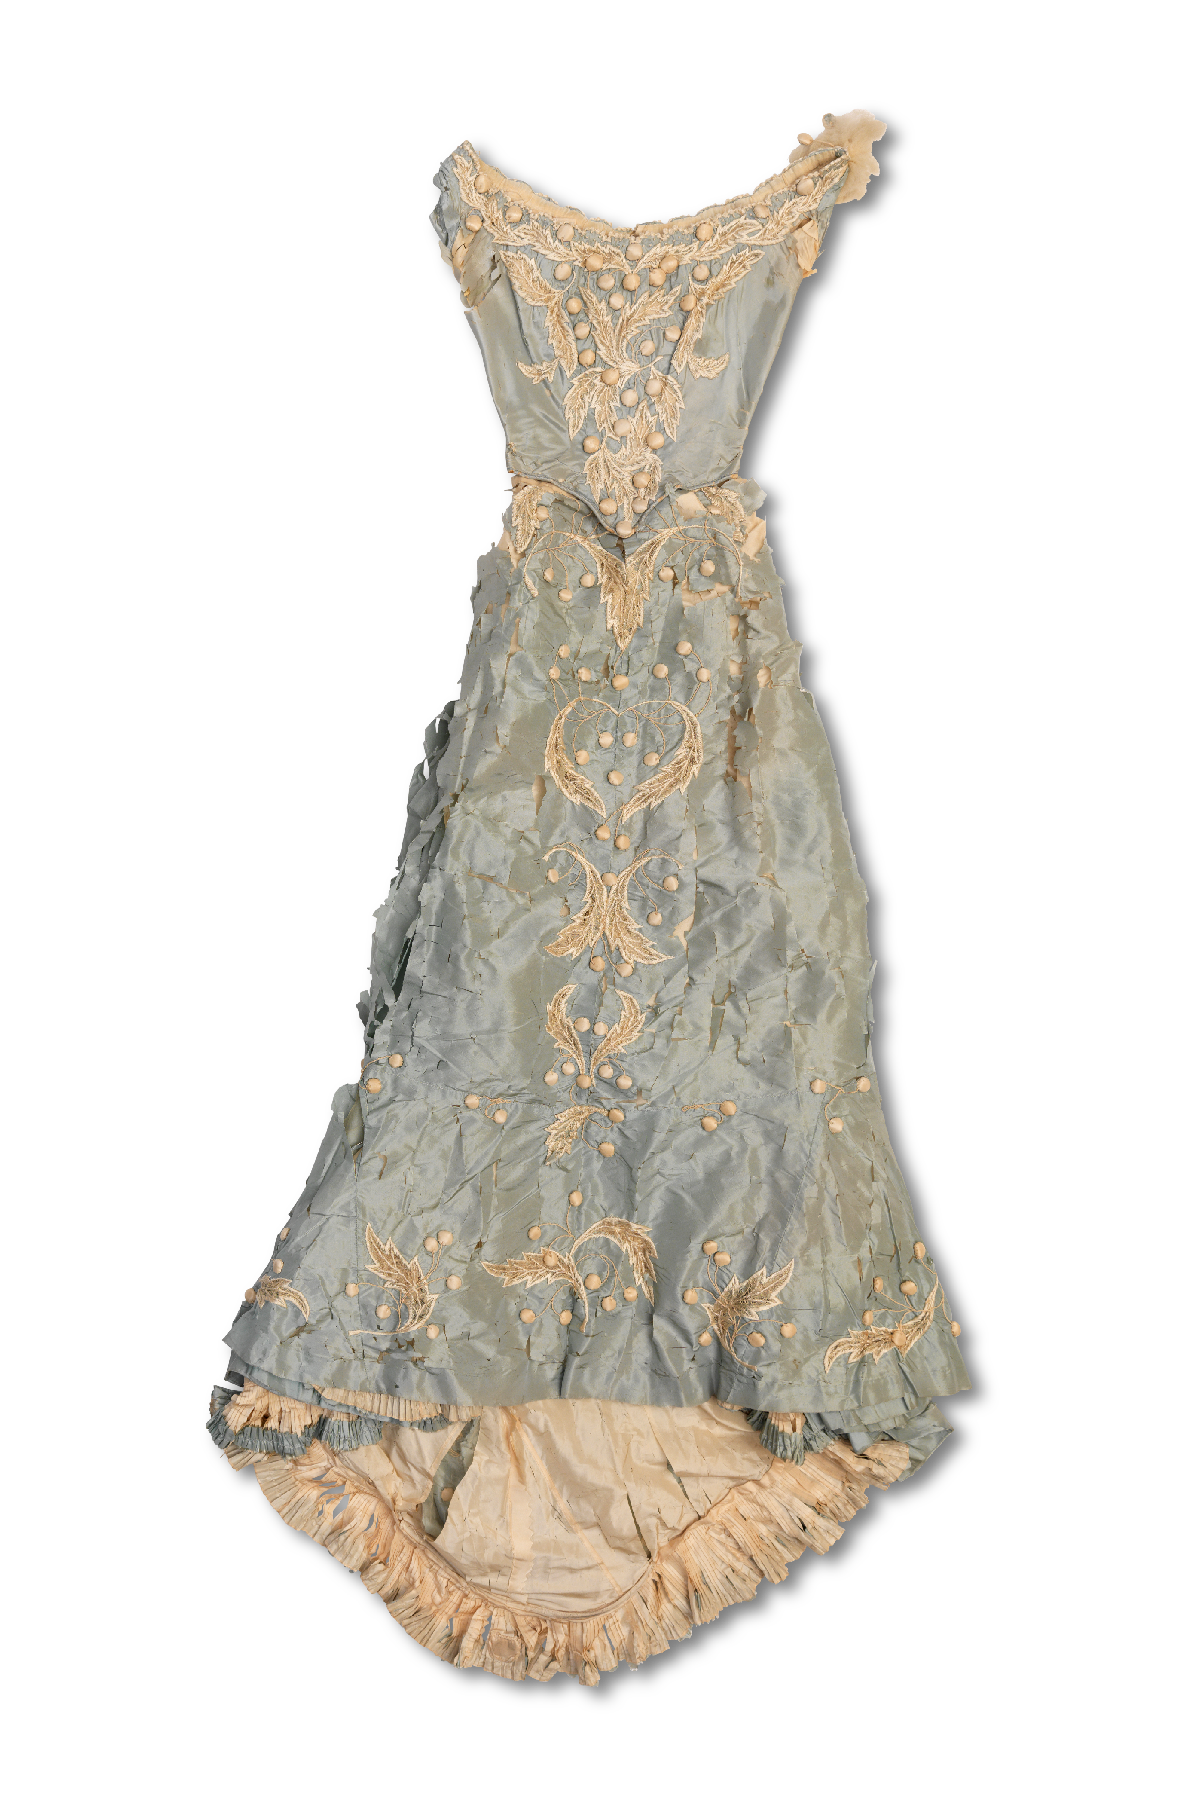 Dress, late 19th century